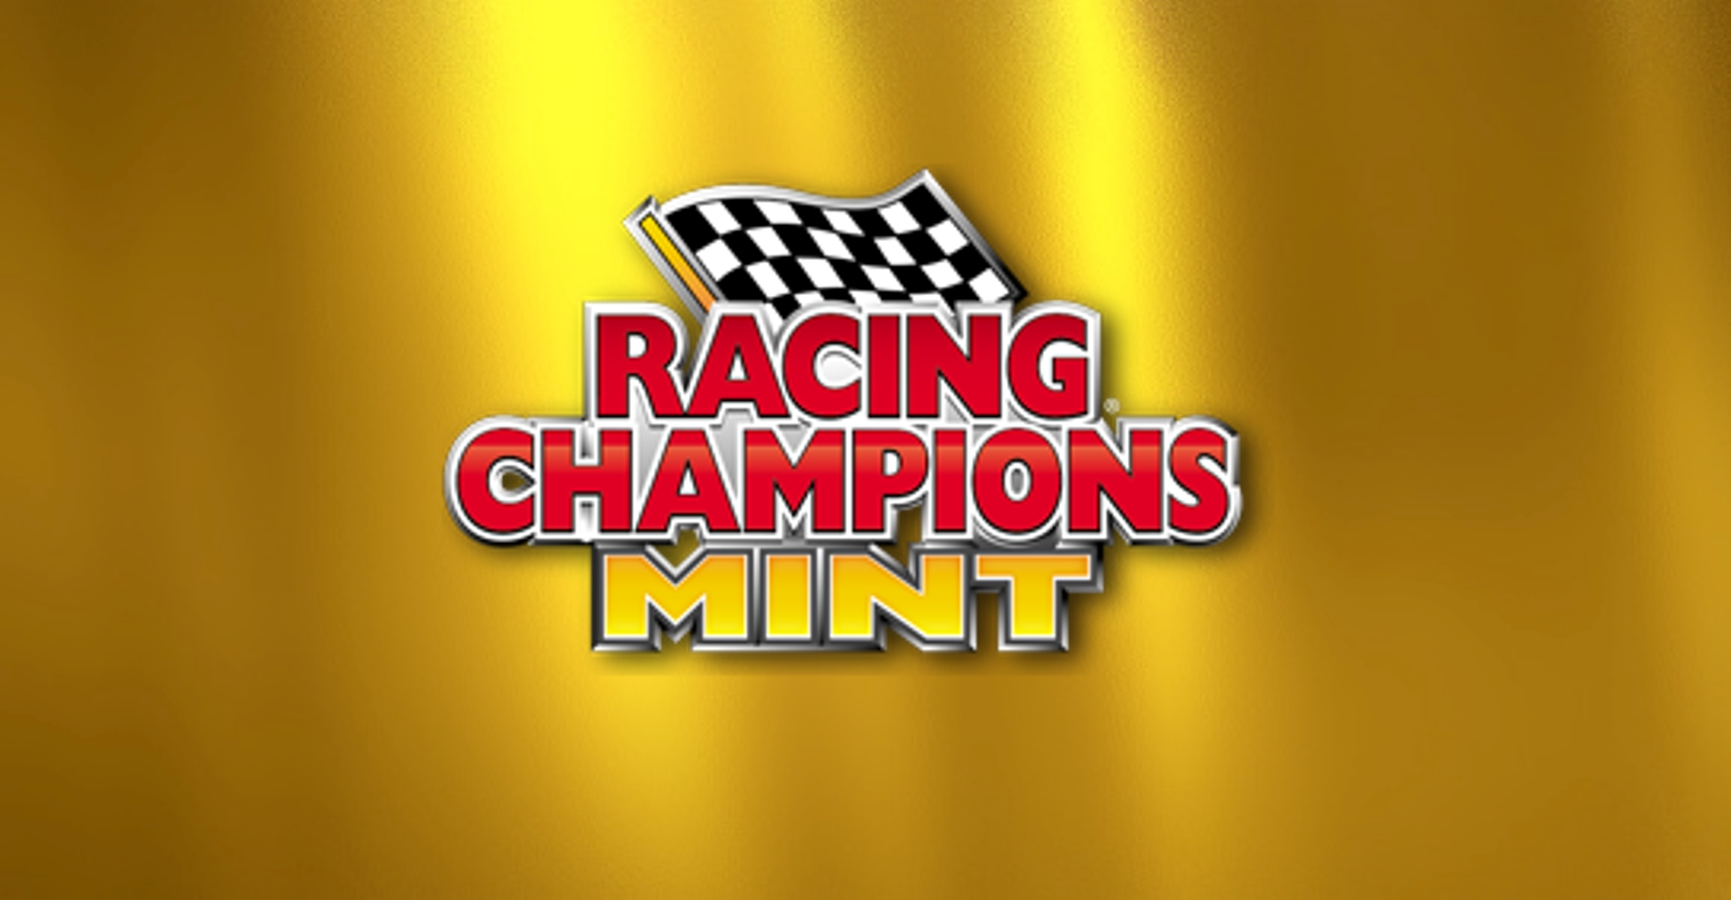 Racing Champions Mint Logo.jpg